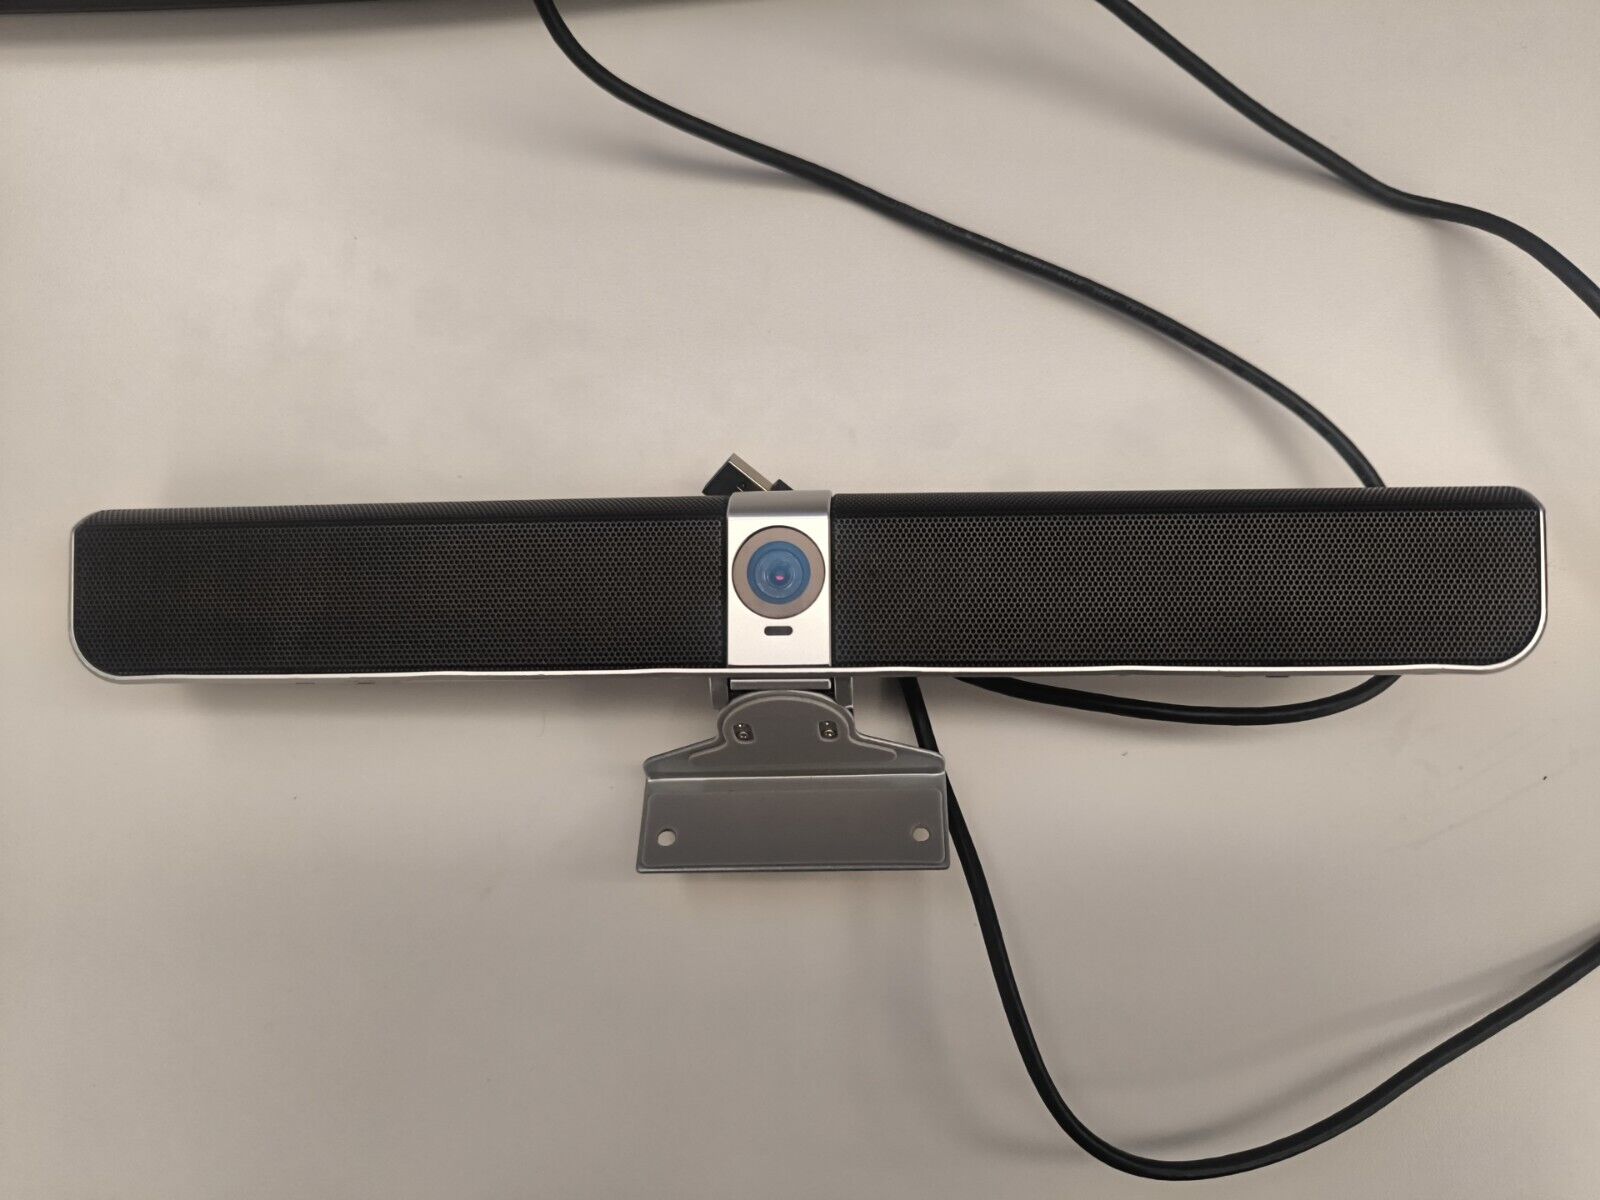 InFocus HW-Camera-2 USB 3.0 720p Universal Webcam 30fs Built in Mic Conference